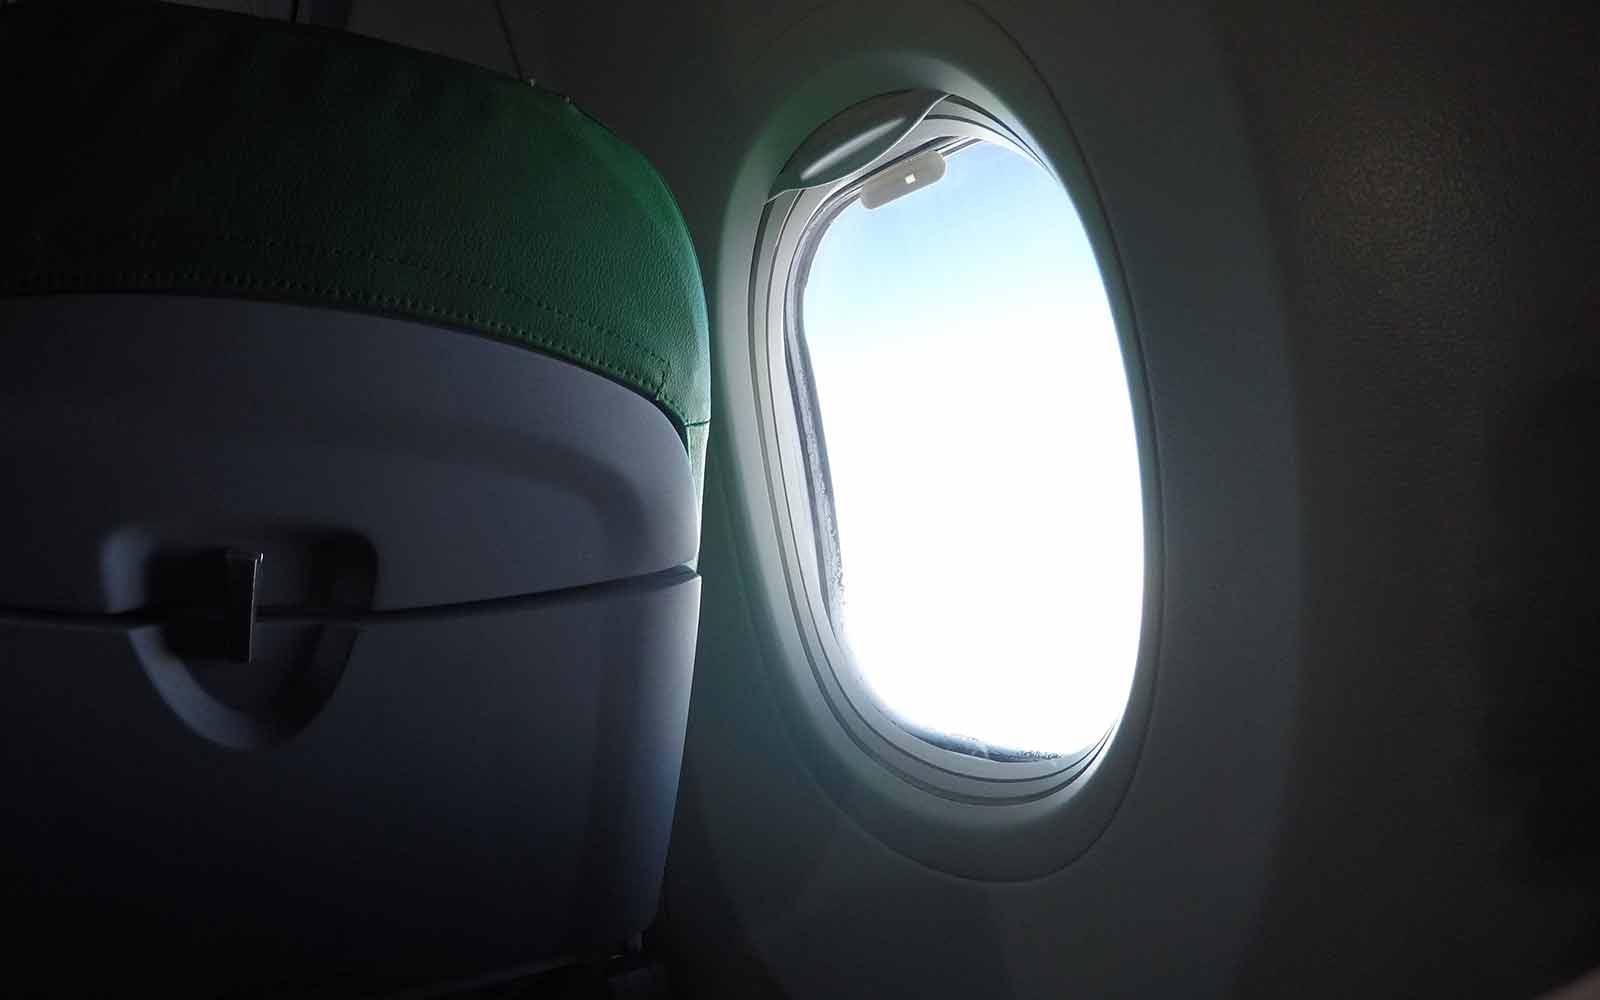 Dark plane interior with light coming through window